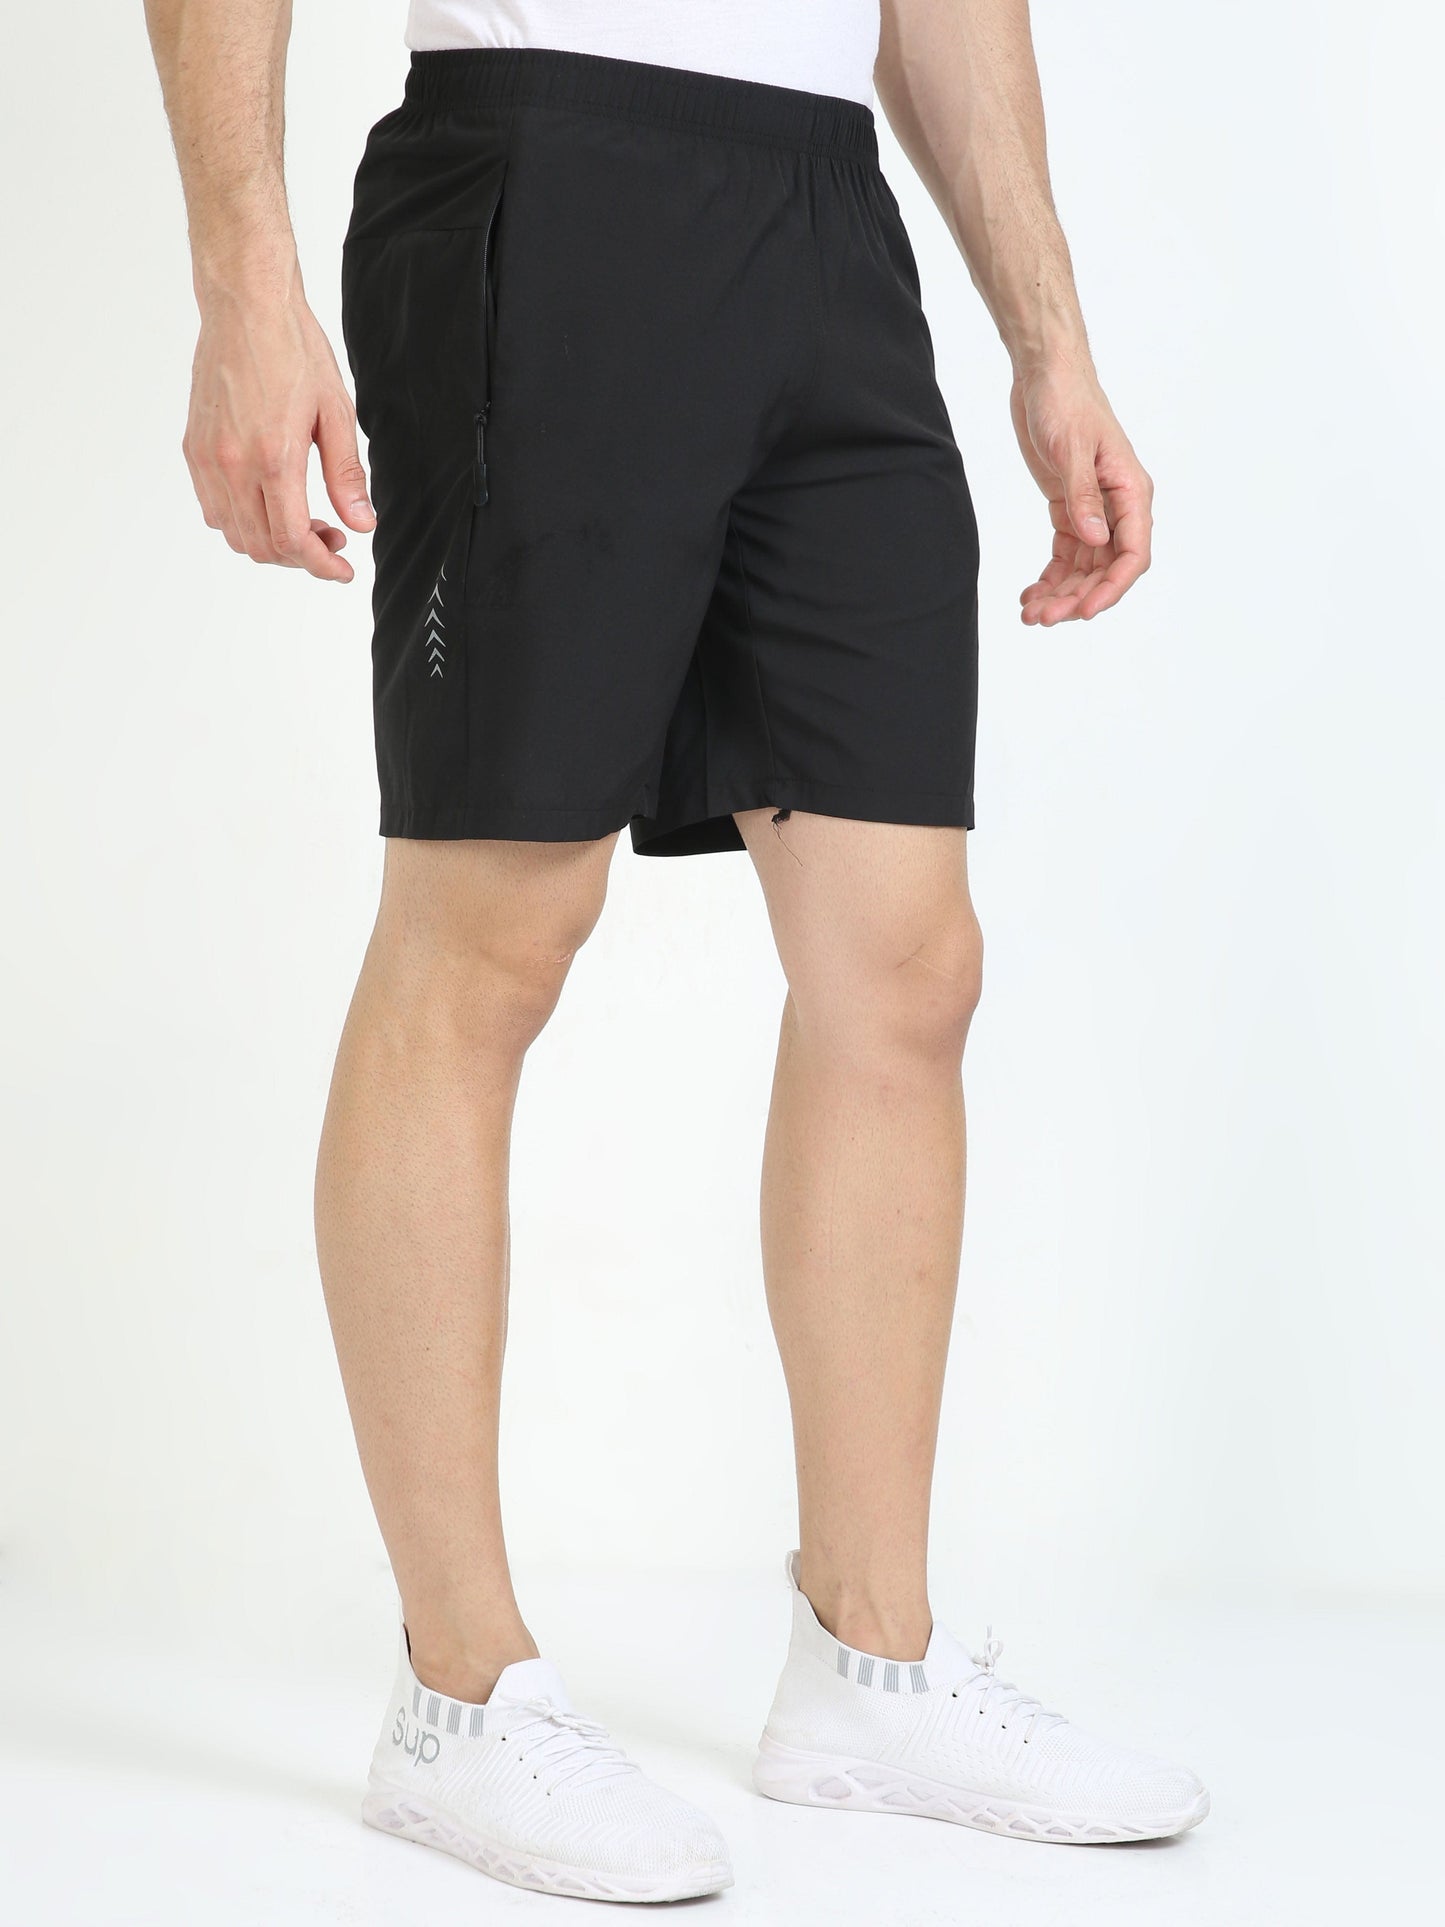 Carbon Black Sports Shorts